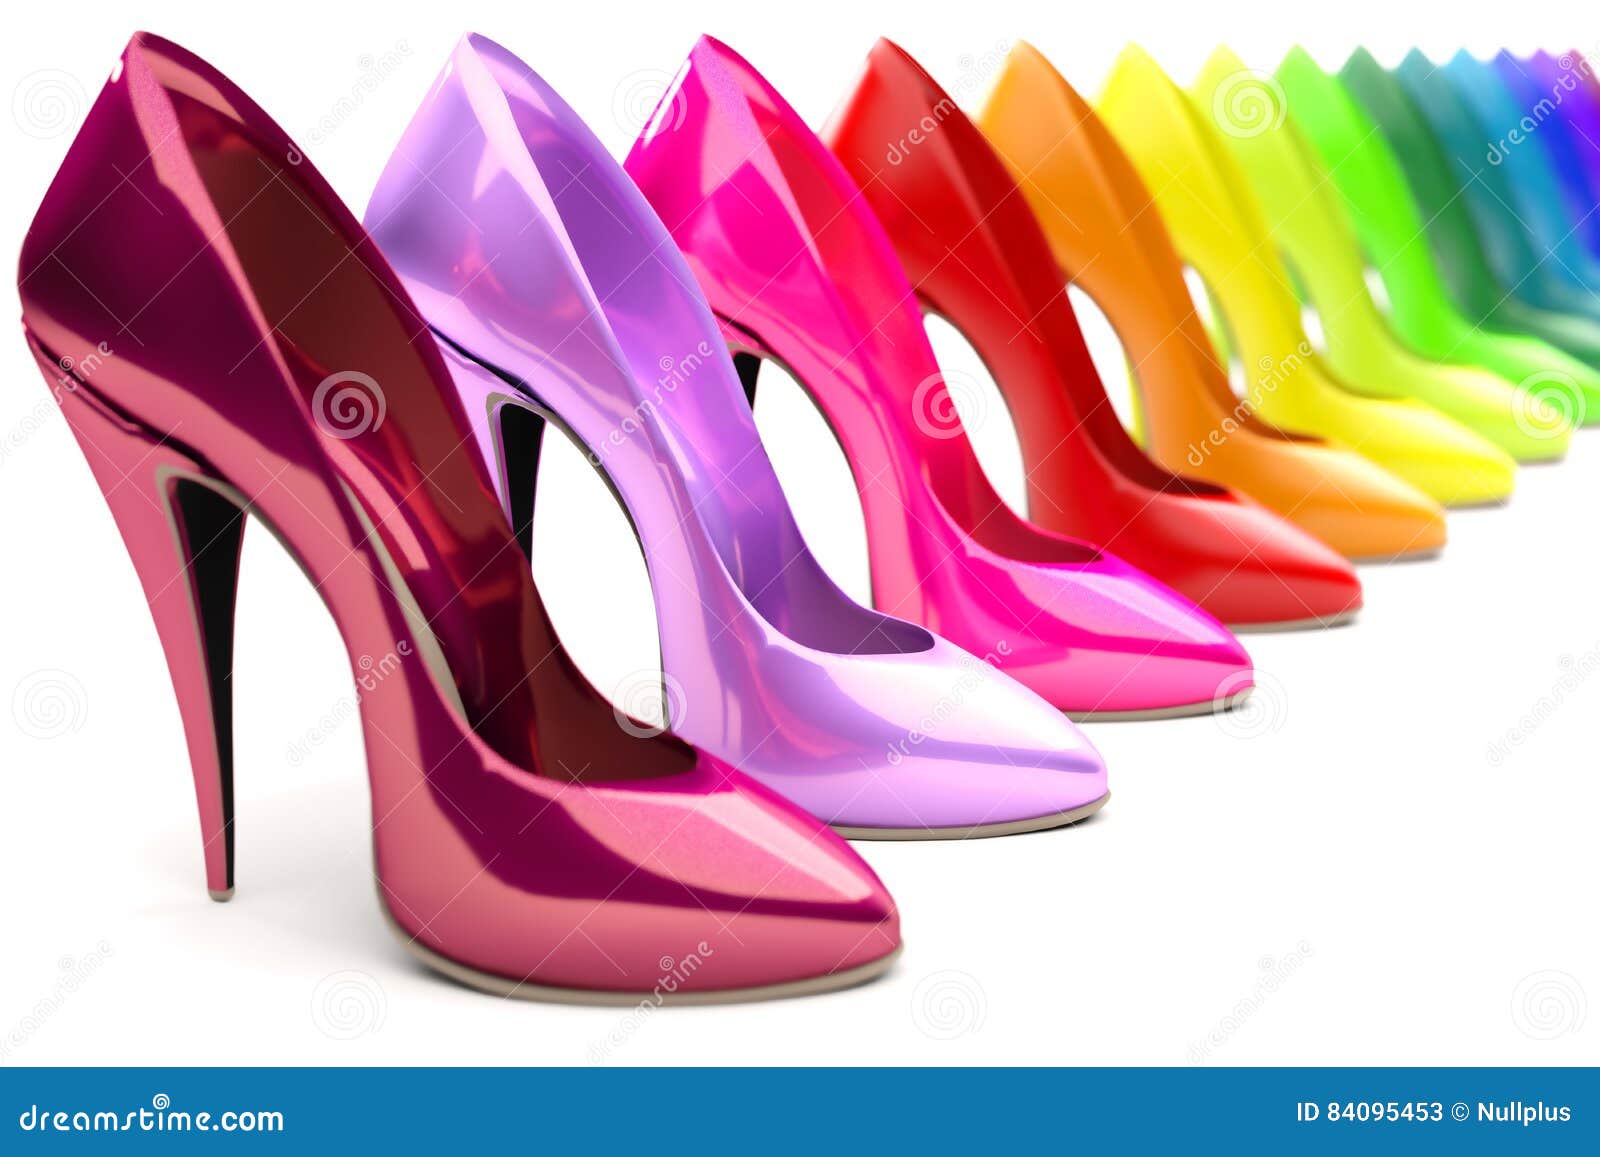 rainbow colored high heels